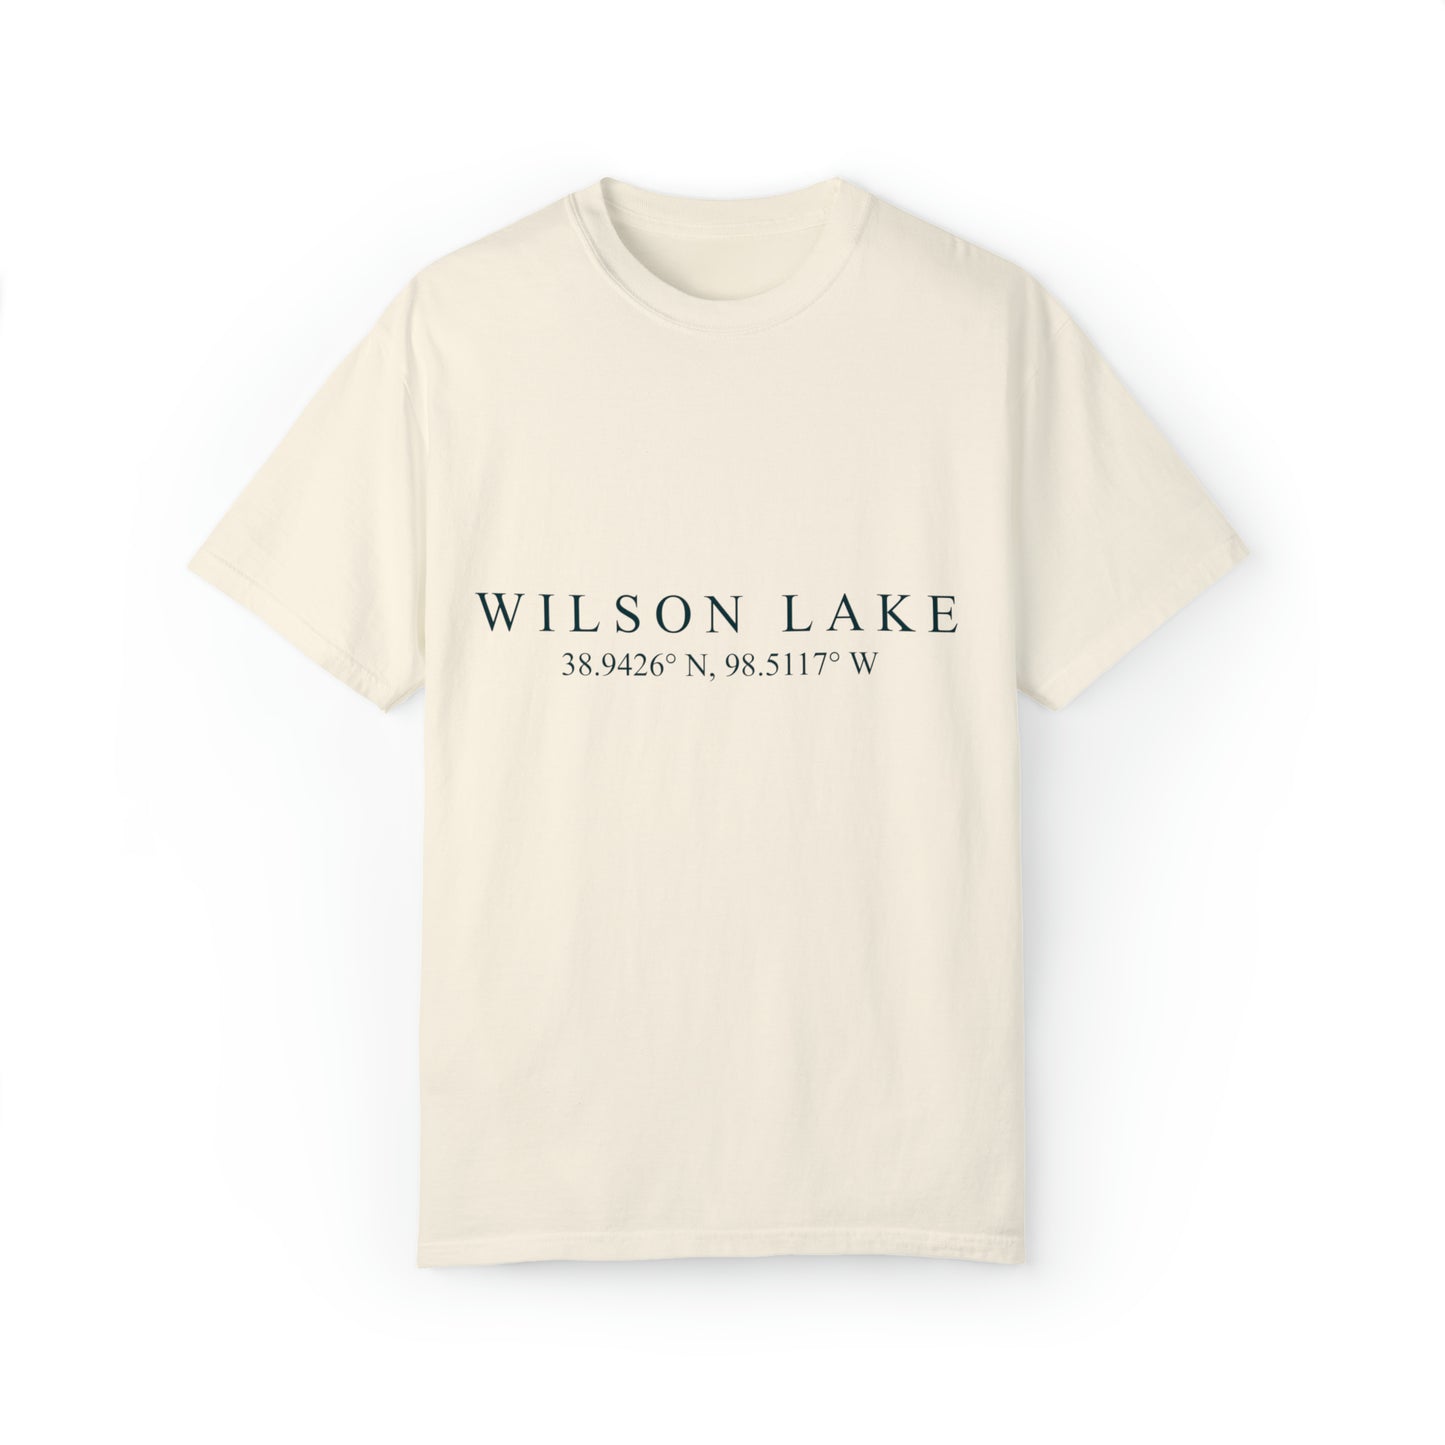 Wilson Lake, AL Tee